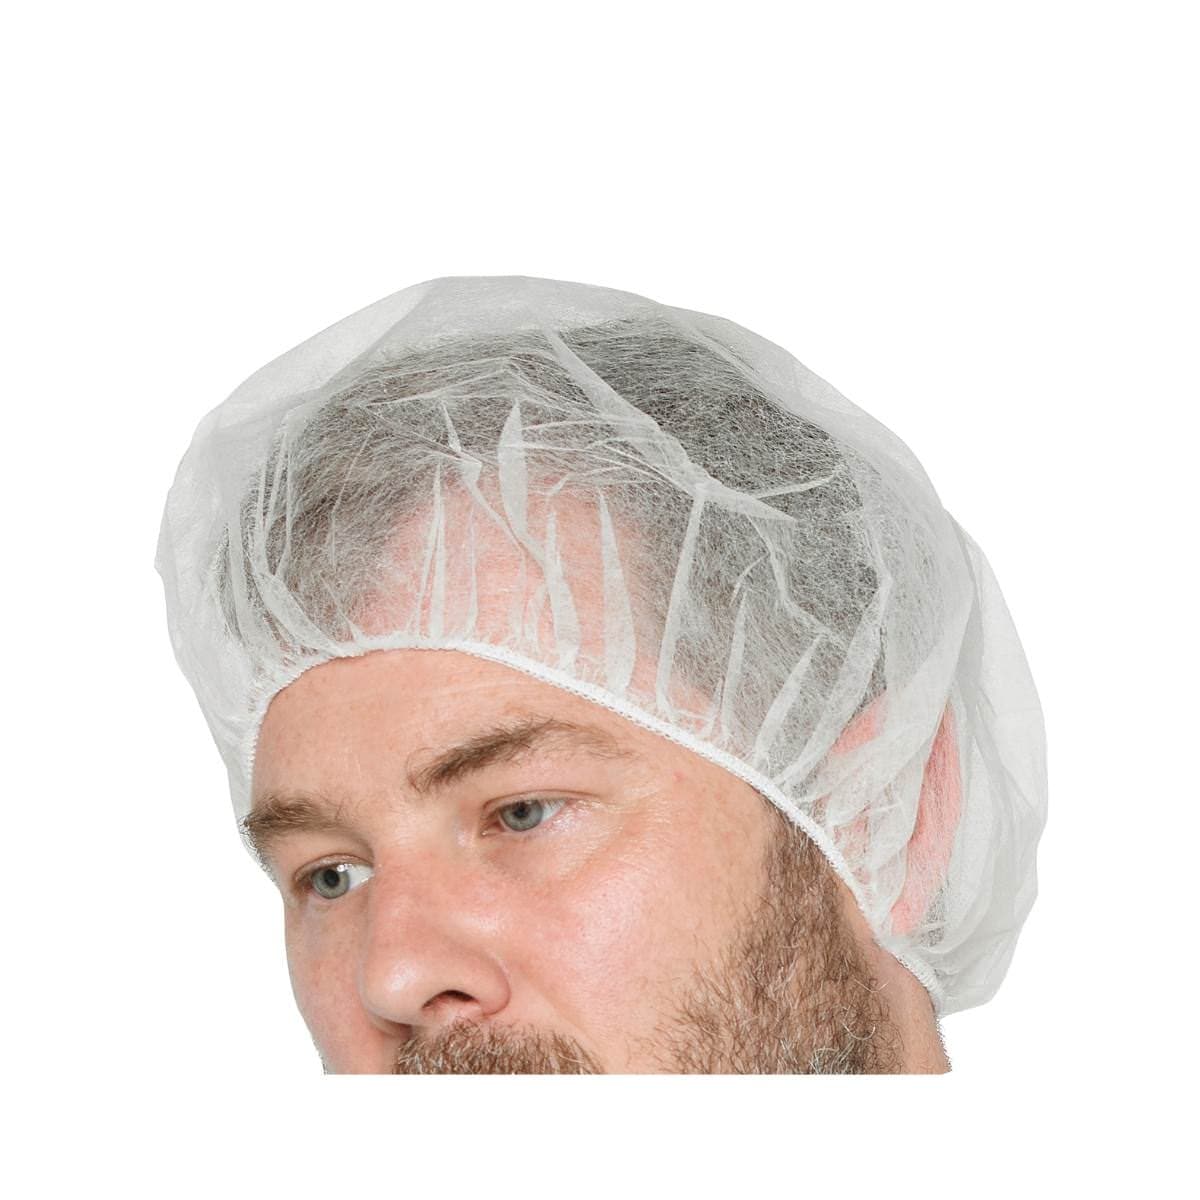 SafeRite® Disposable Hairnet Caps Round SRDBR53 (Carton of 1000)